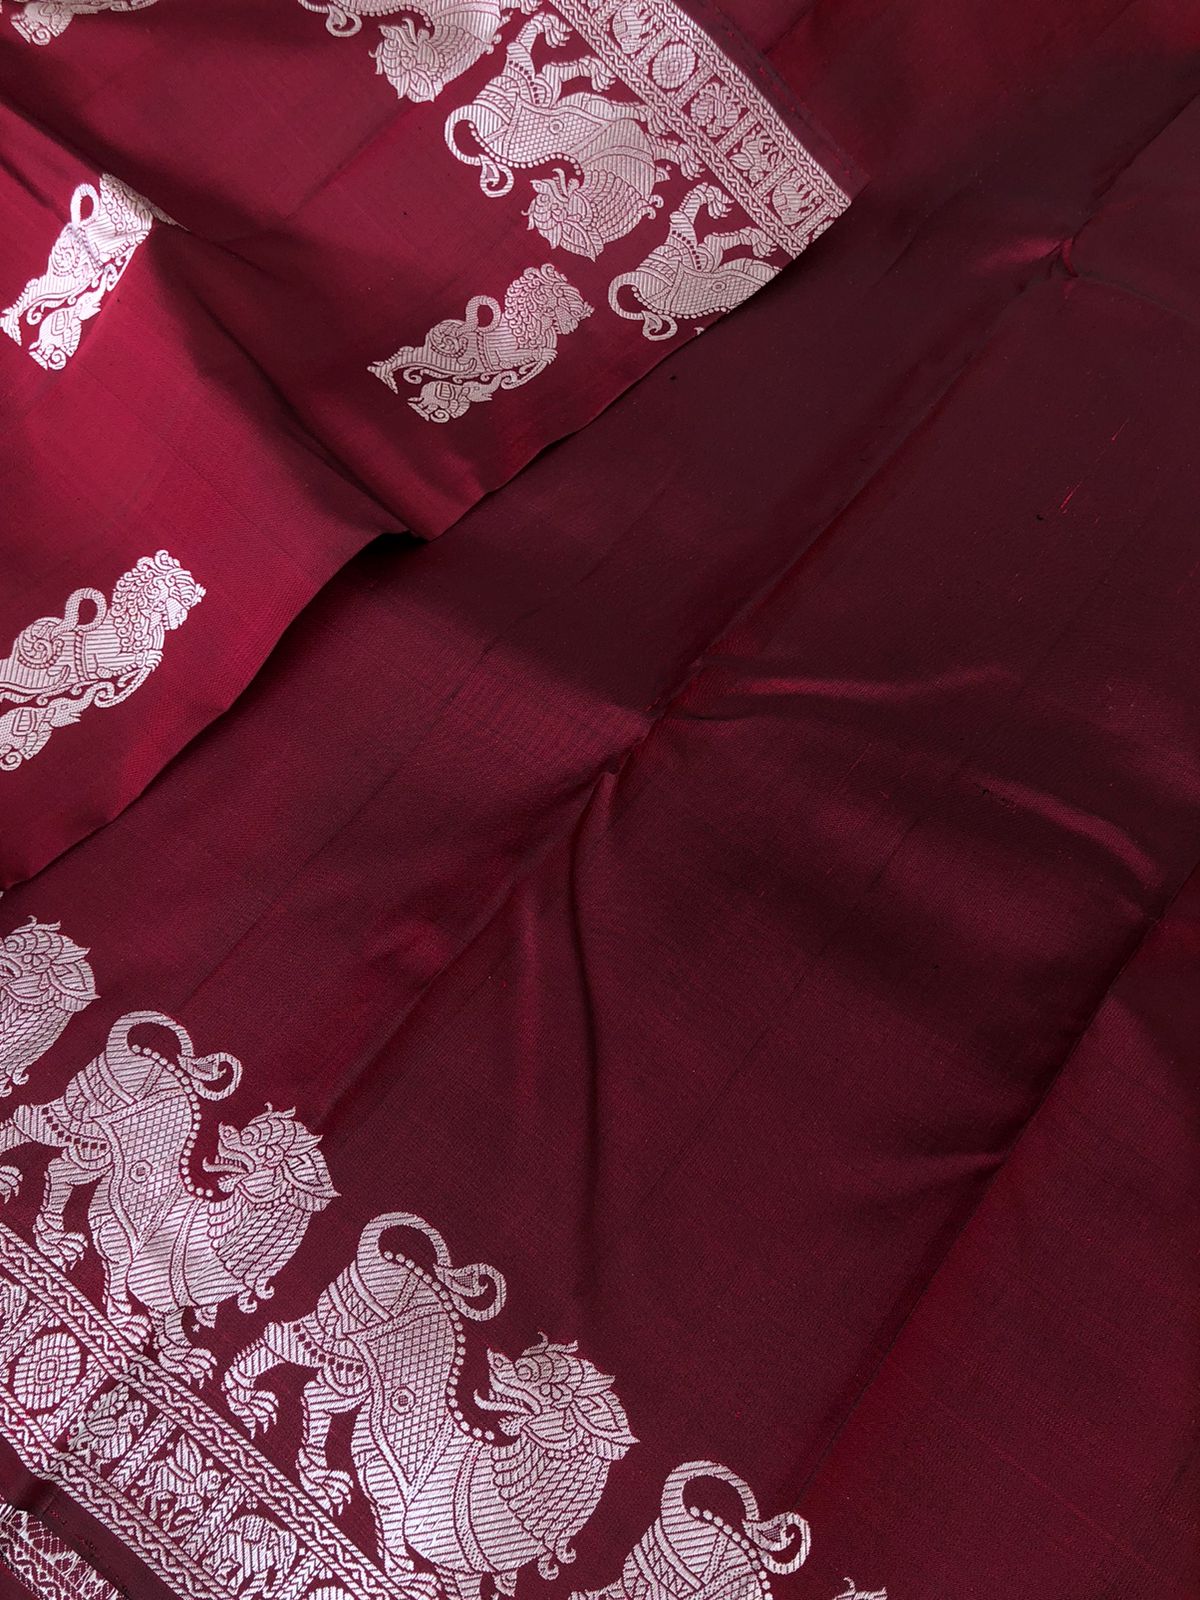 Woven from Memories - No Zari Kanchivarams - deep dark burgundy maroon with yali woven borders and buttas